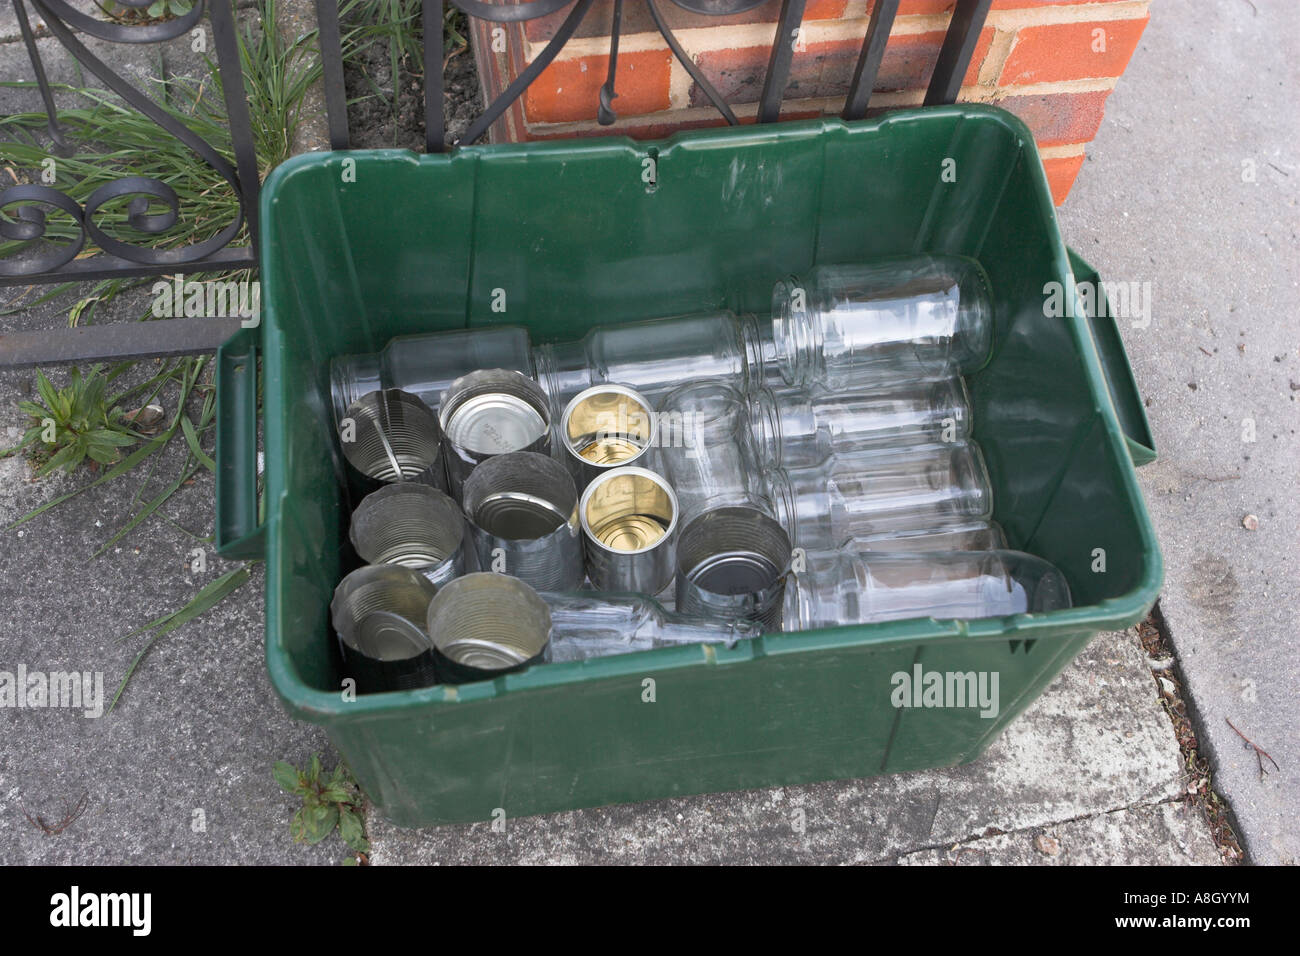 Domestic recycling bin Stock Photo